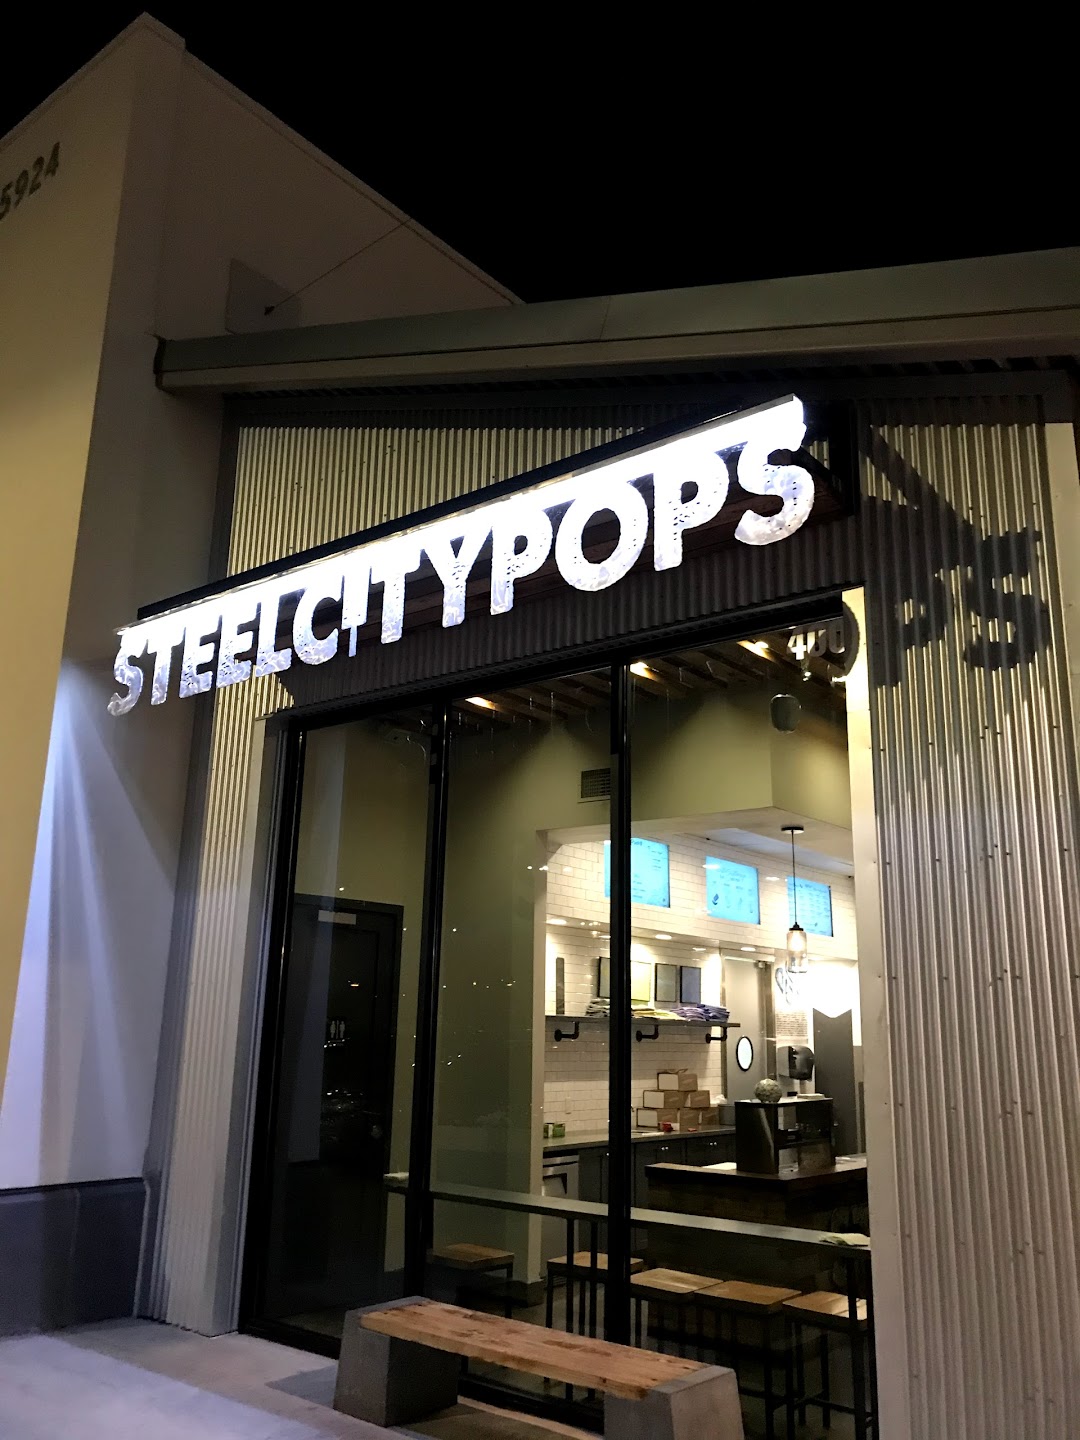 Steel City Pops